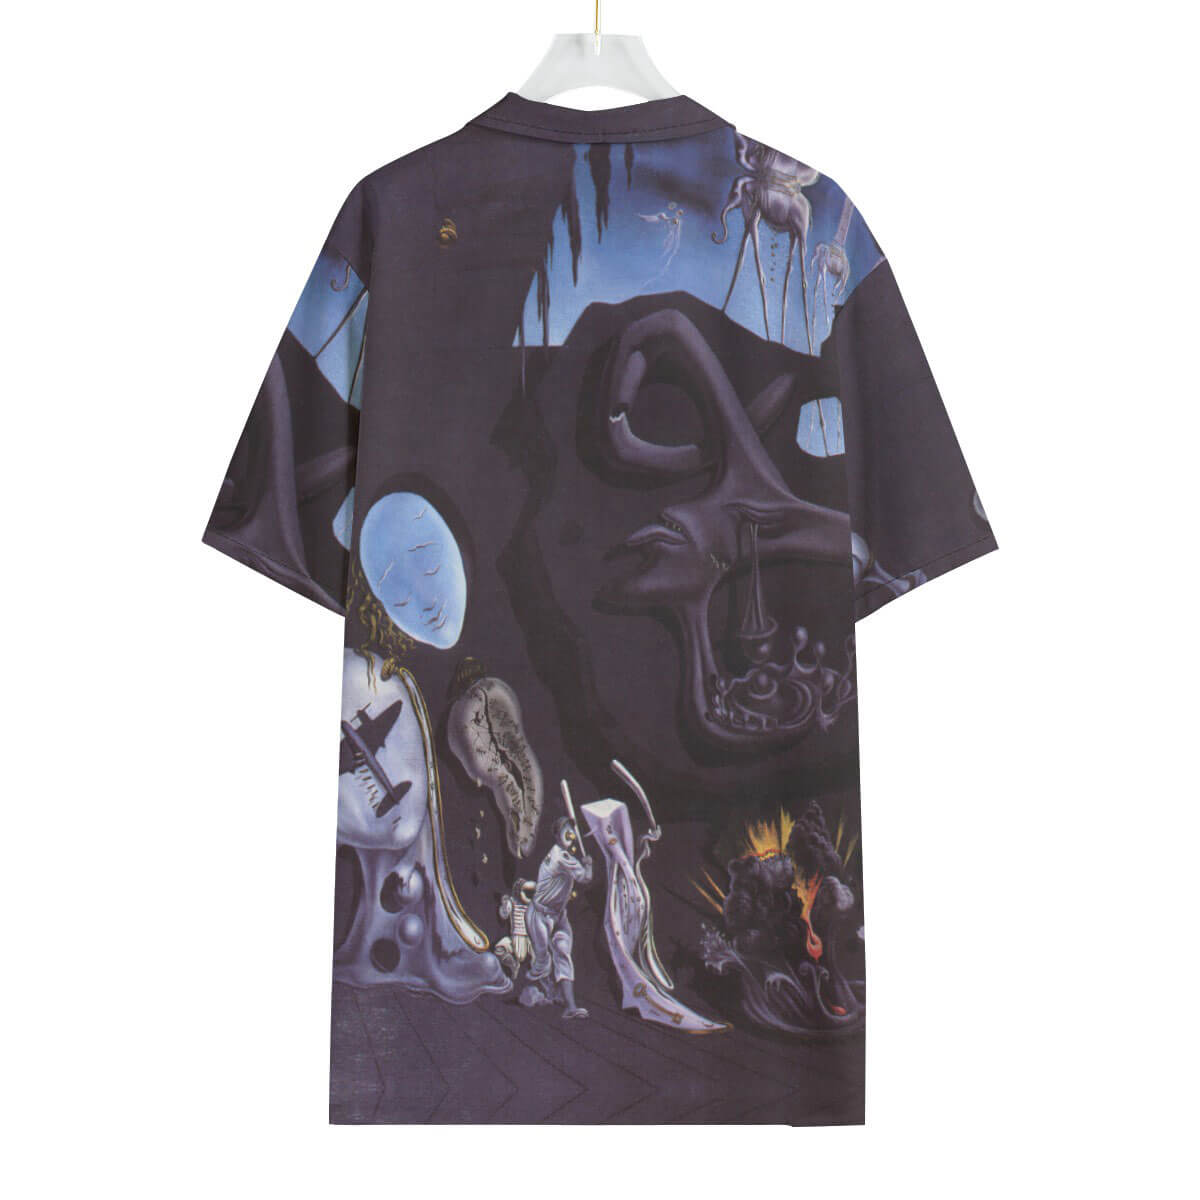 Close-up of surrealist atomic imagery on Dali-inspired Hawaiian shirt